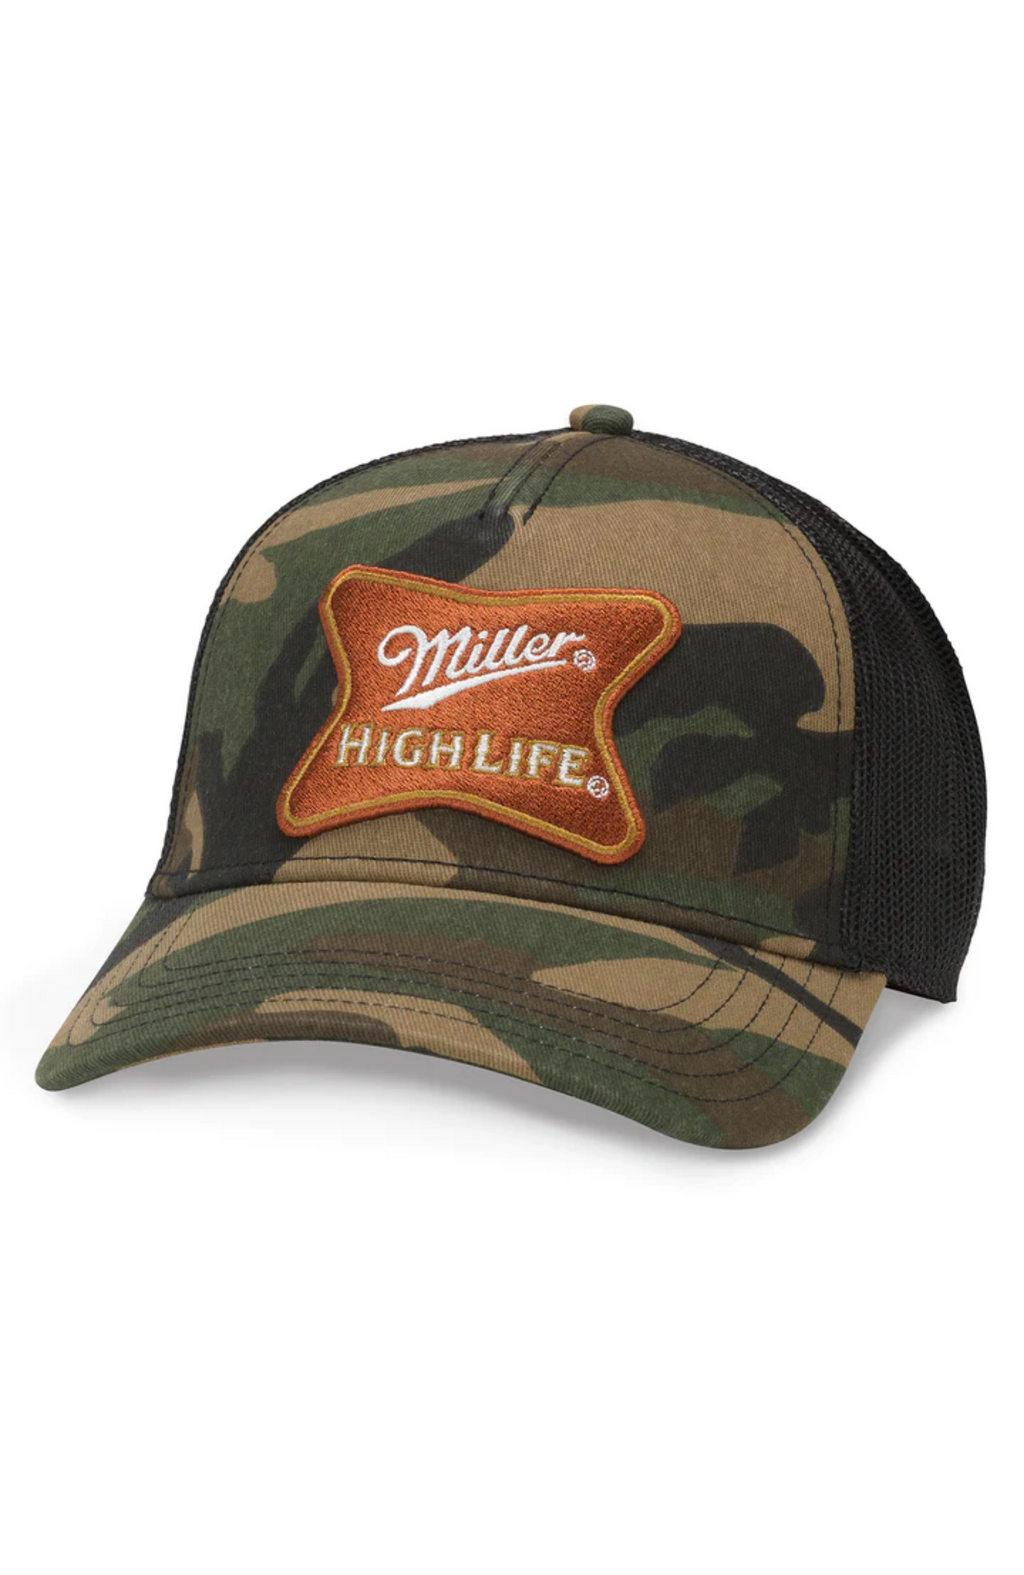 American Needle - Miller High Life Valin